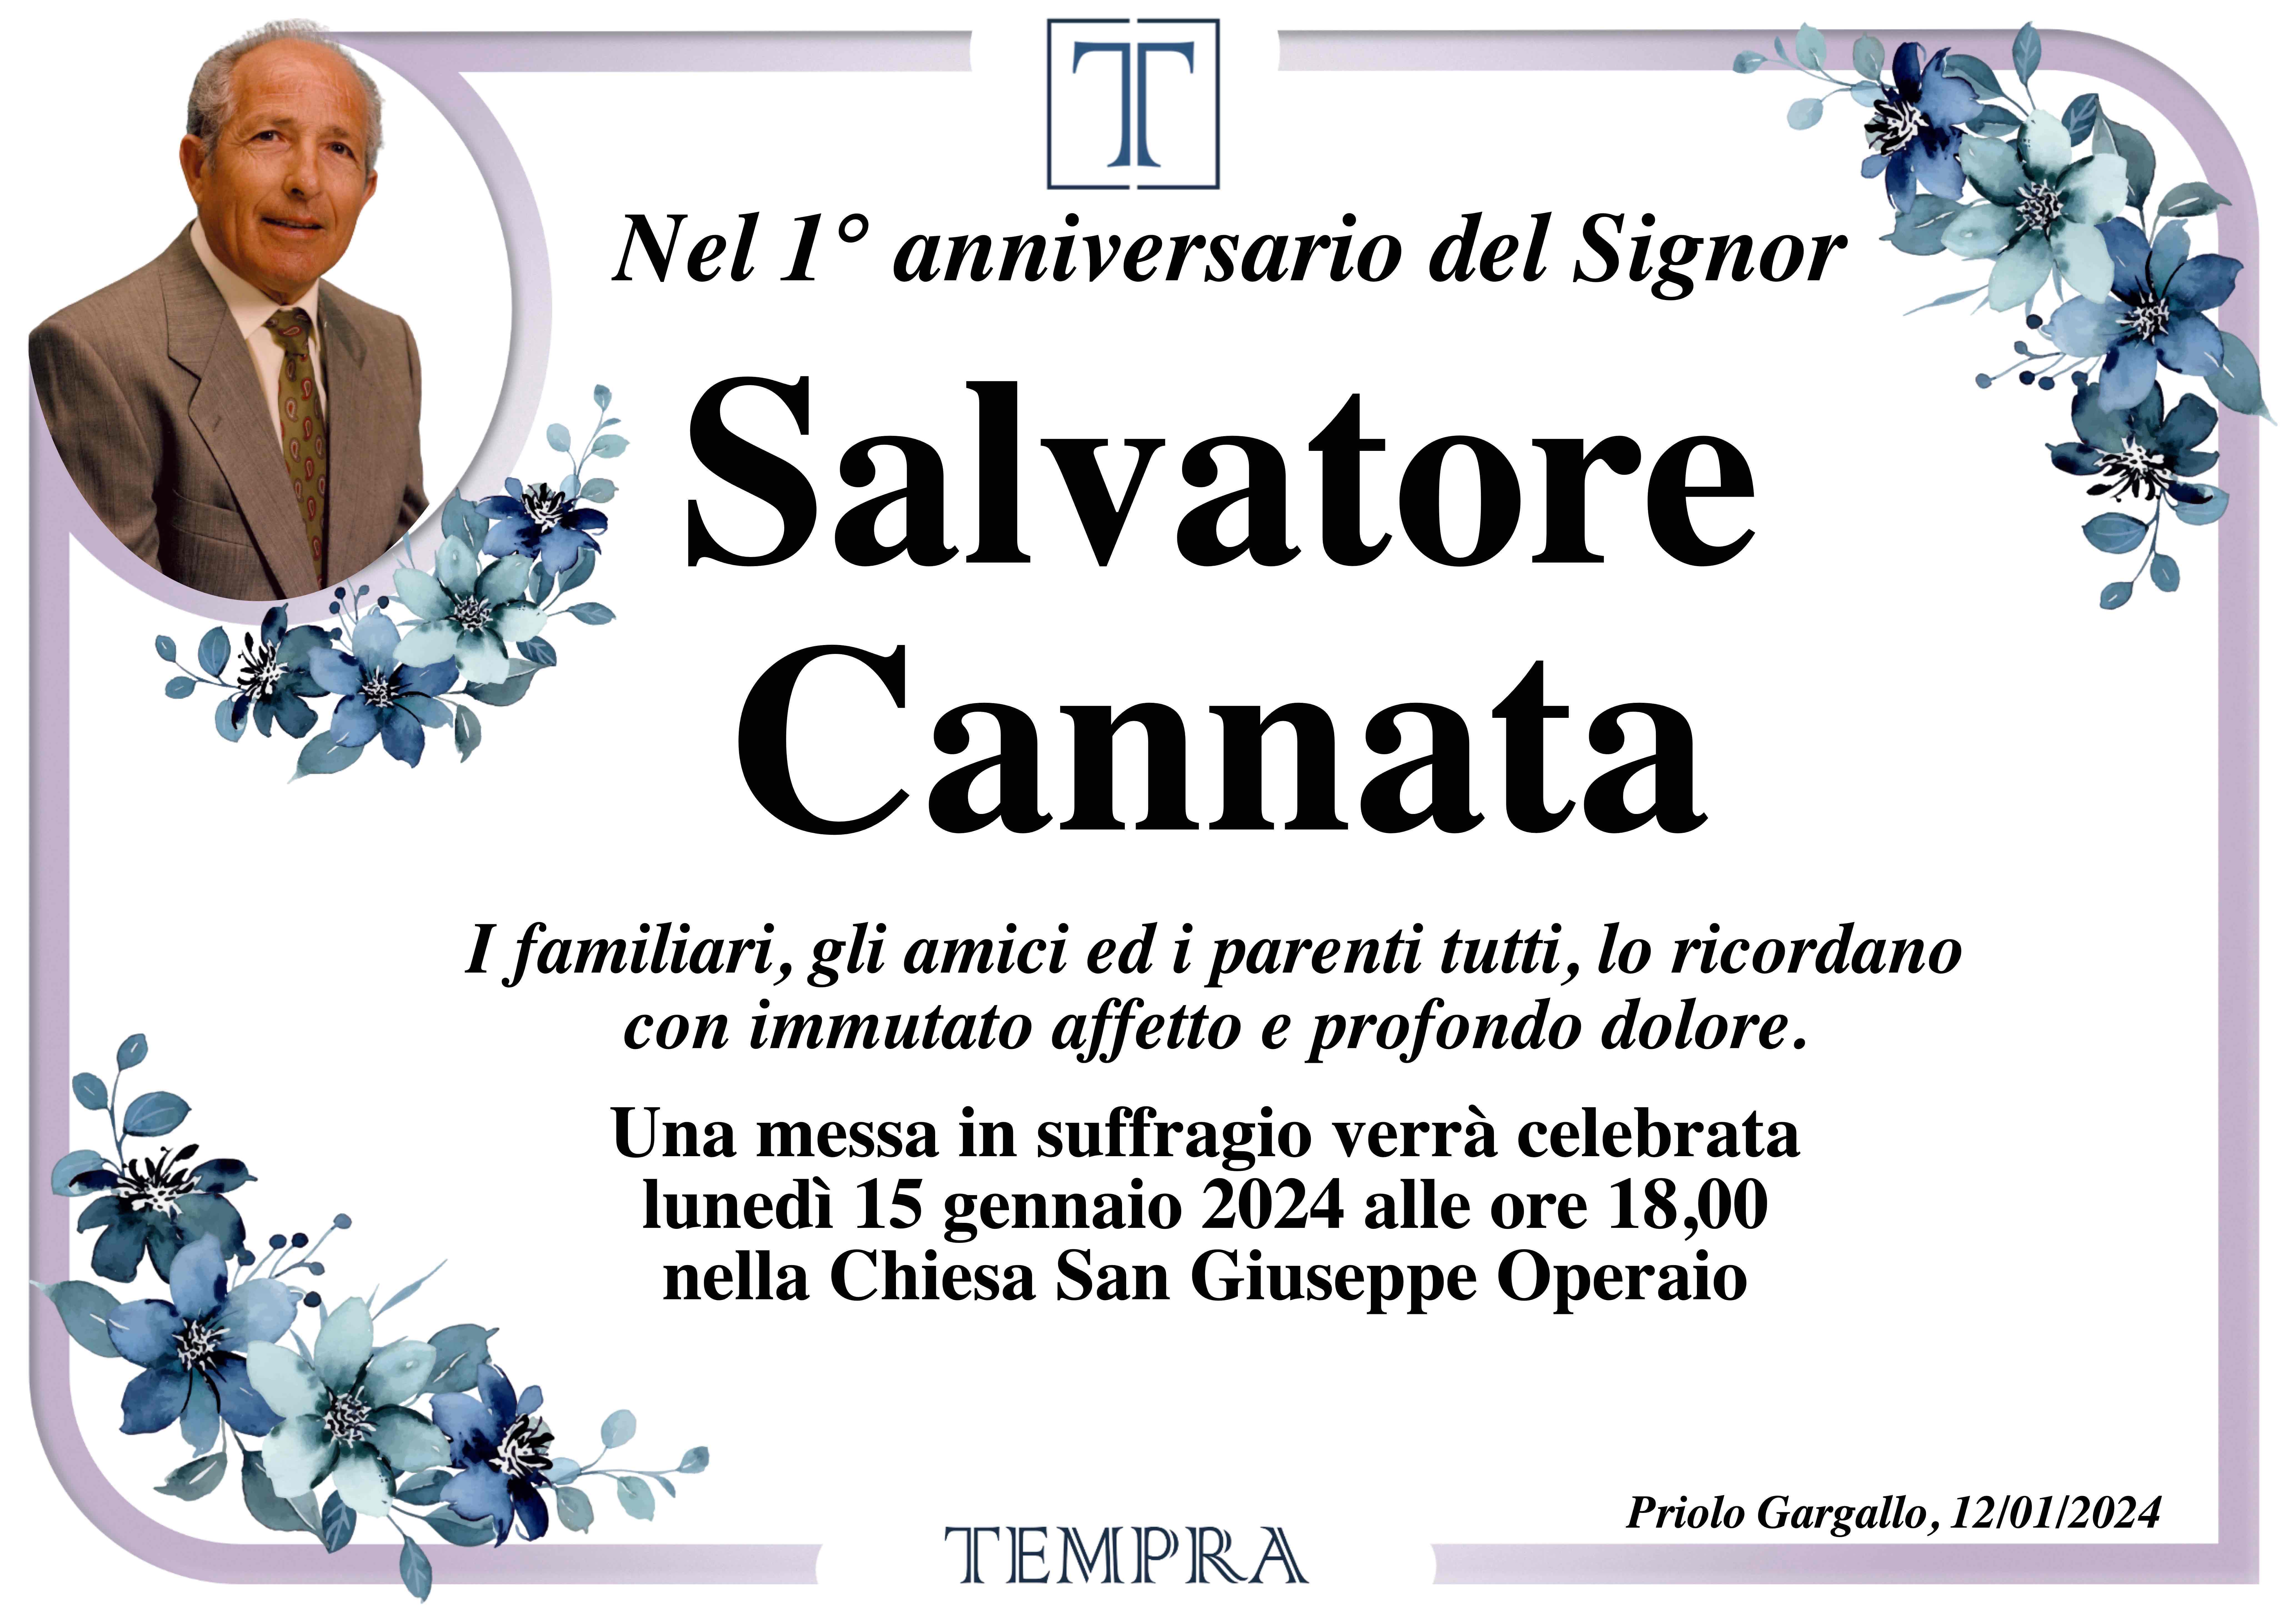 Salvatore Cannata